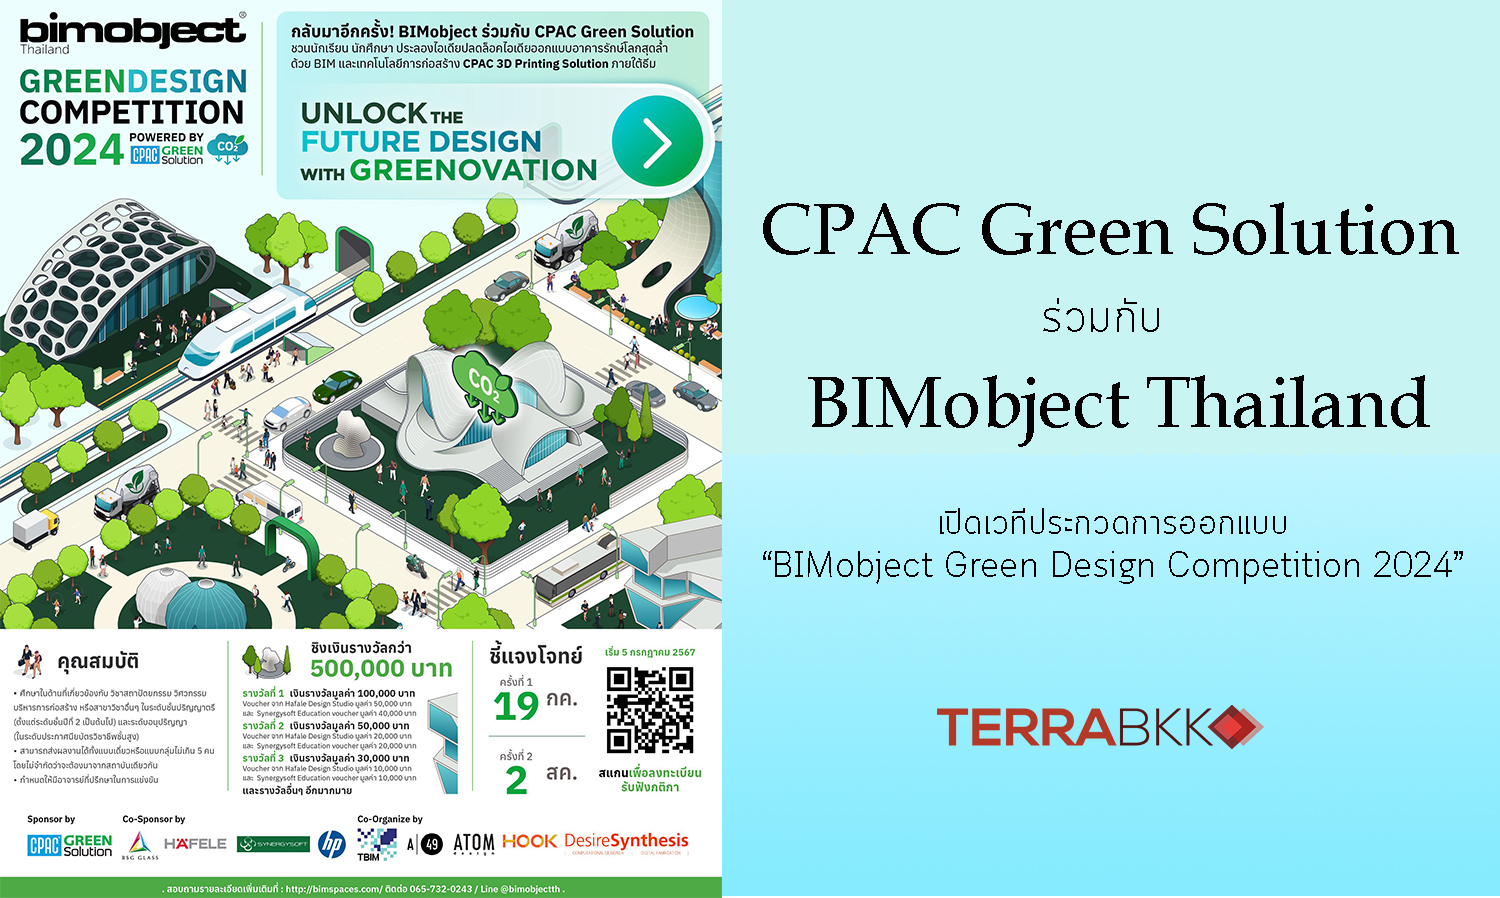 CPAC Green Solution ร่วมกับ BIMobject Thailand เปิดเวทีประกวดการออกแบบ “BIMobject Green Design Competition 2024” 